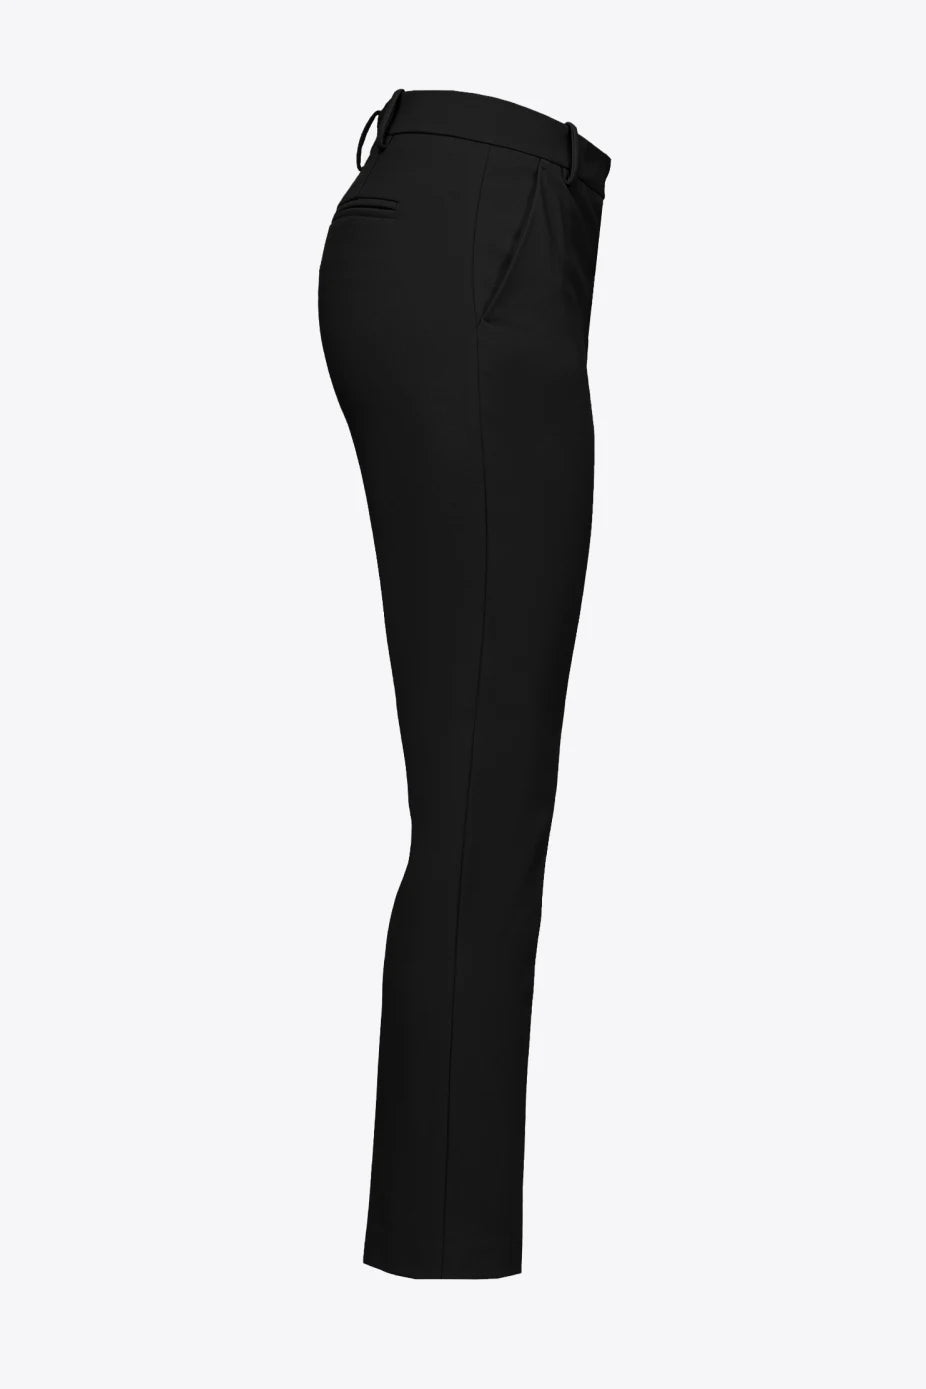 Pantalone Punto Stoffa Pinko / Nero - Ideal Moda